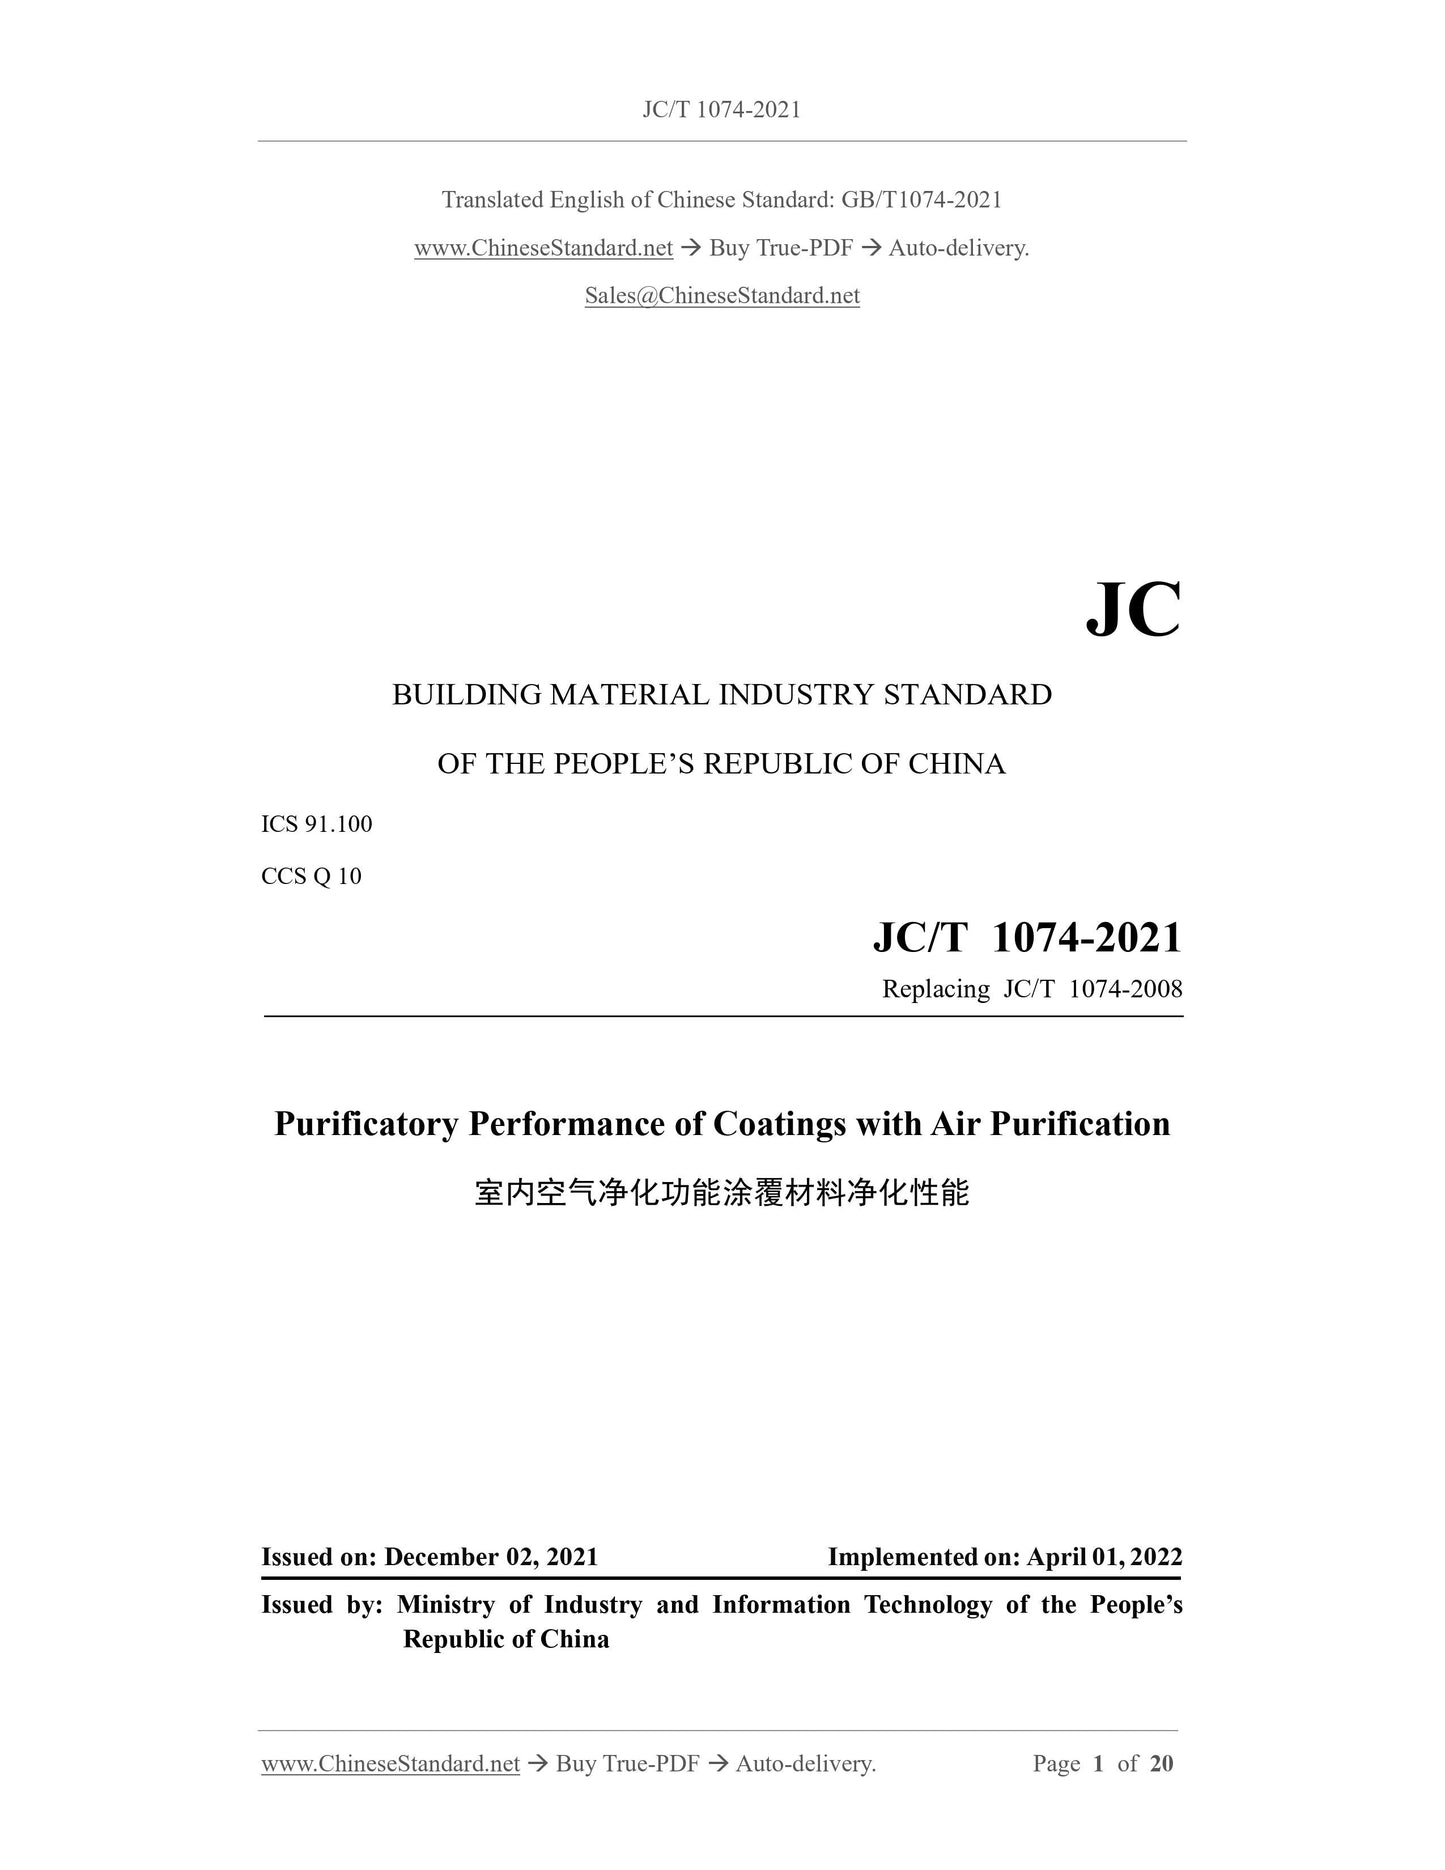 JC/T 1074-2021 Page 1